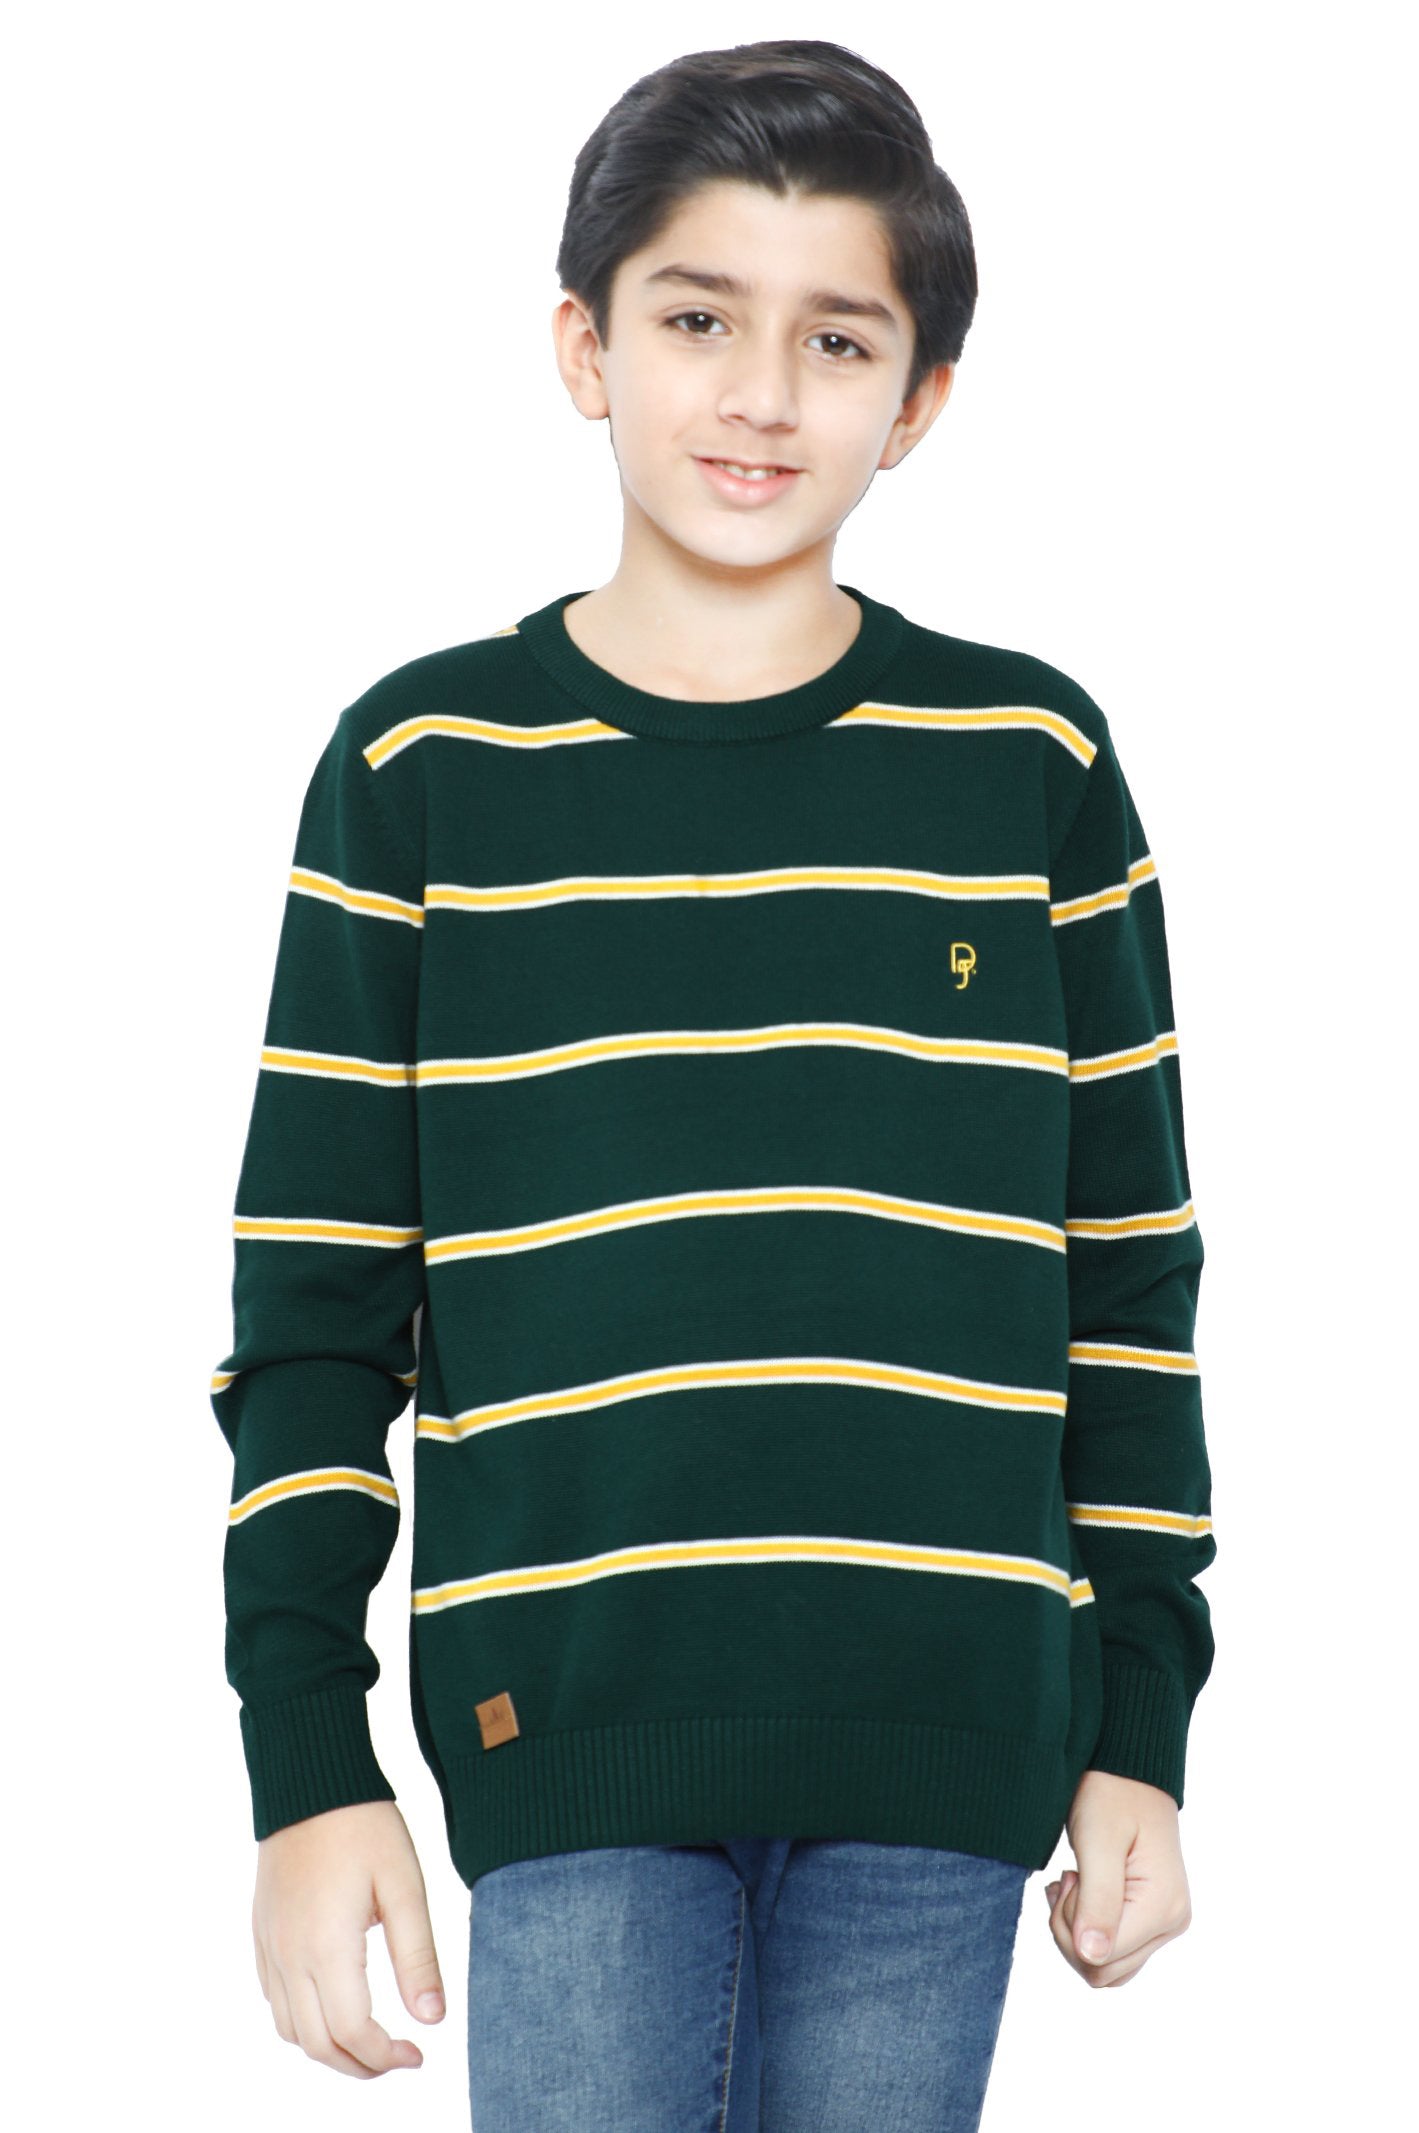 Boys Sweaters In Green SKU: KBE-0162-GREEN - Diners